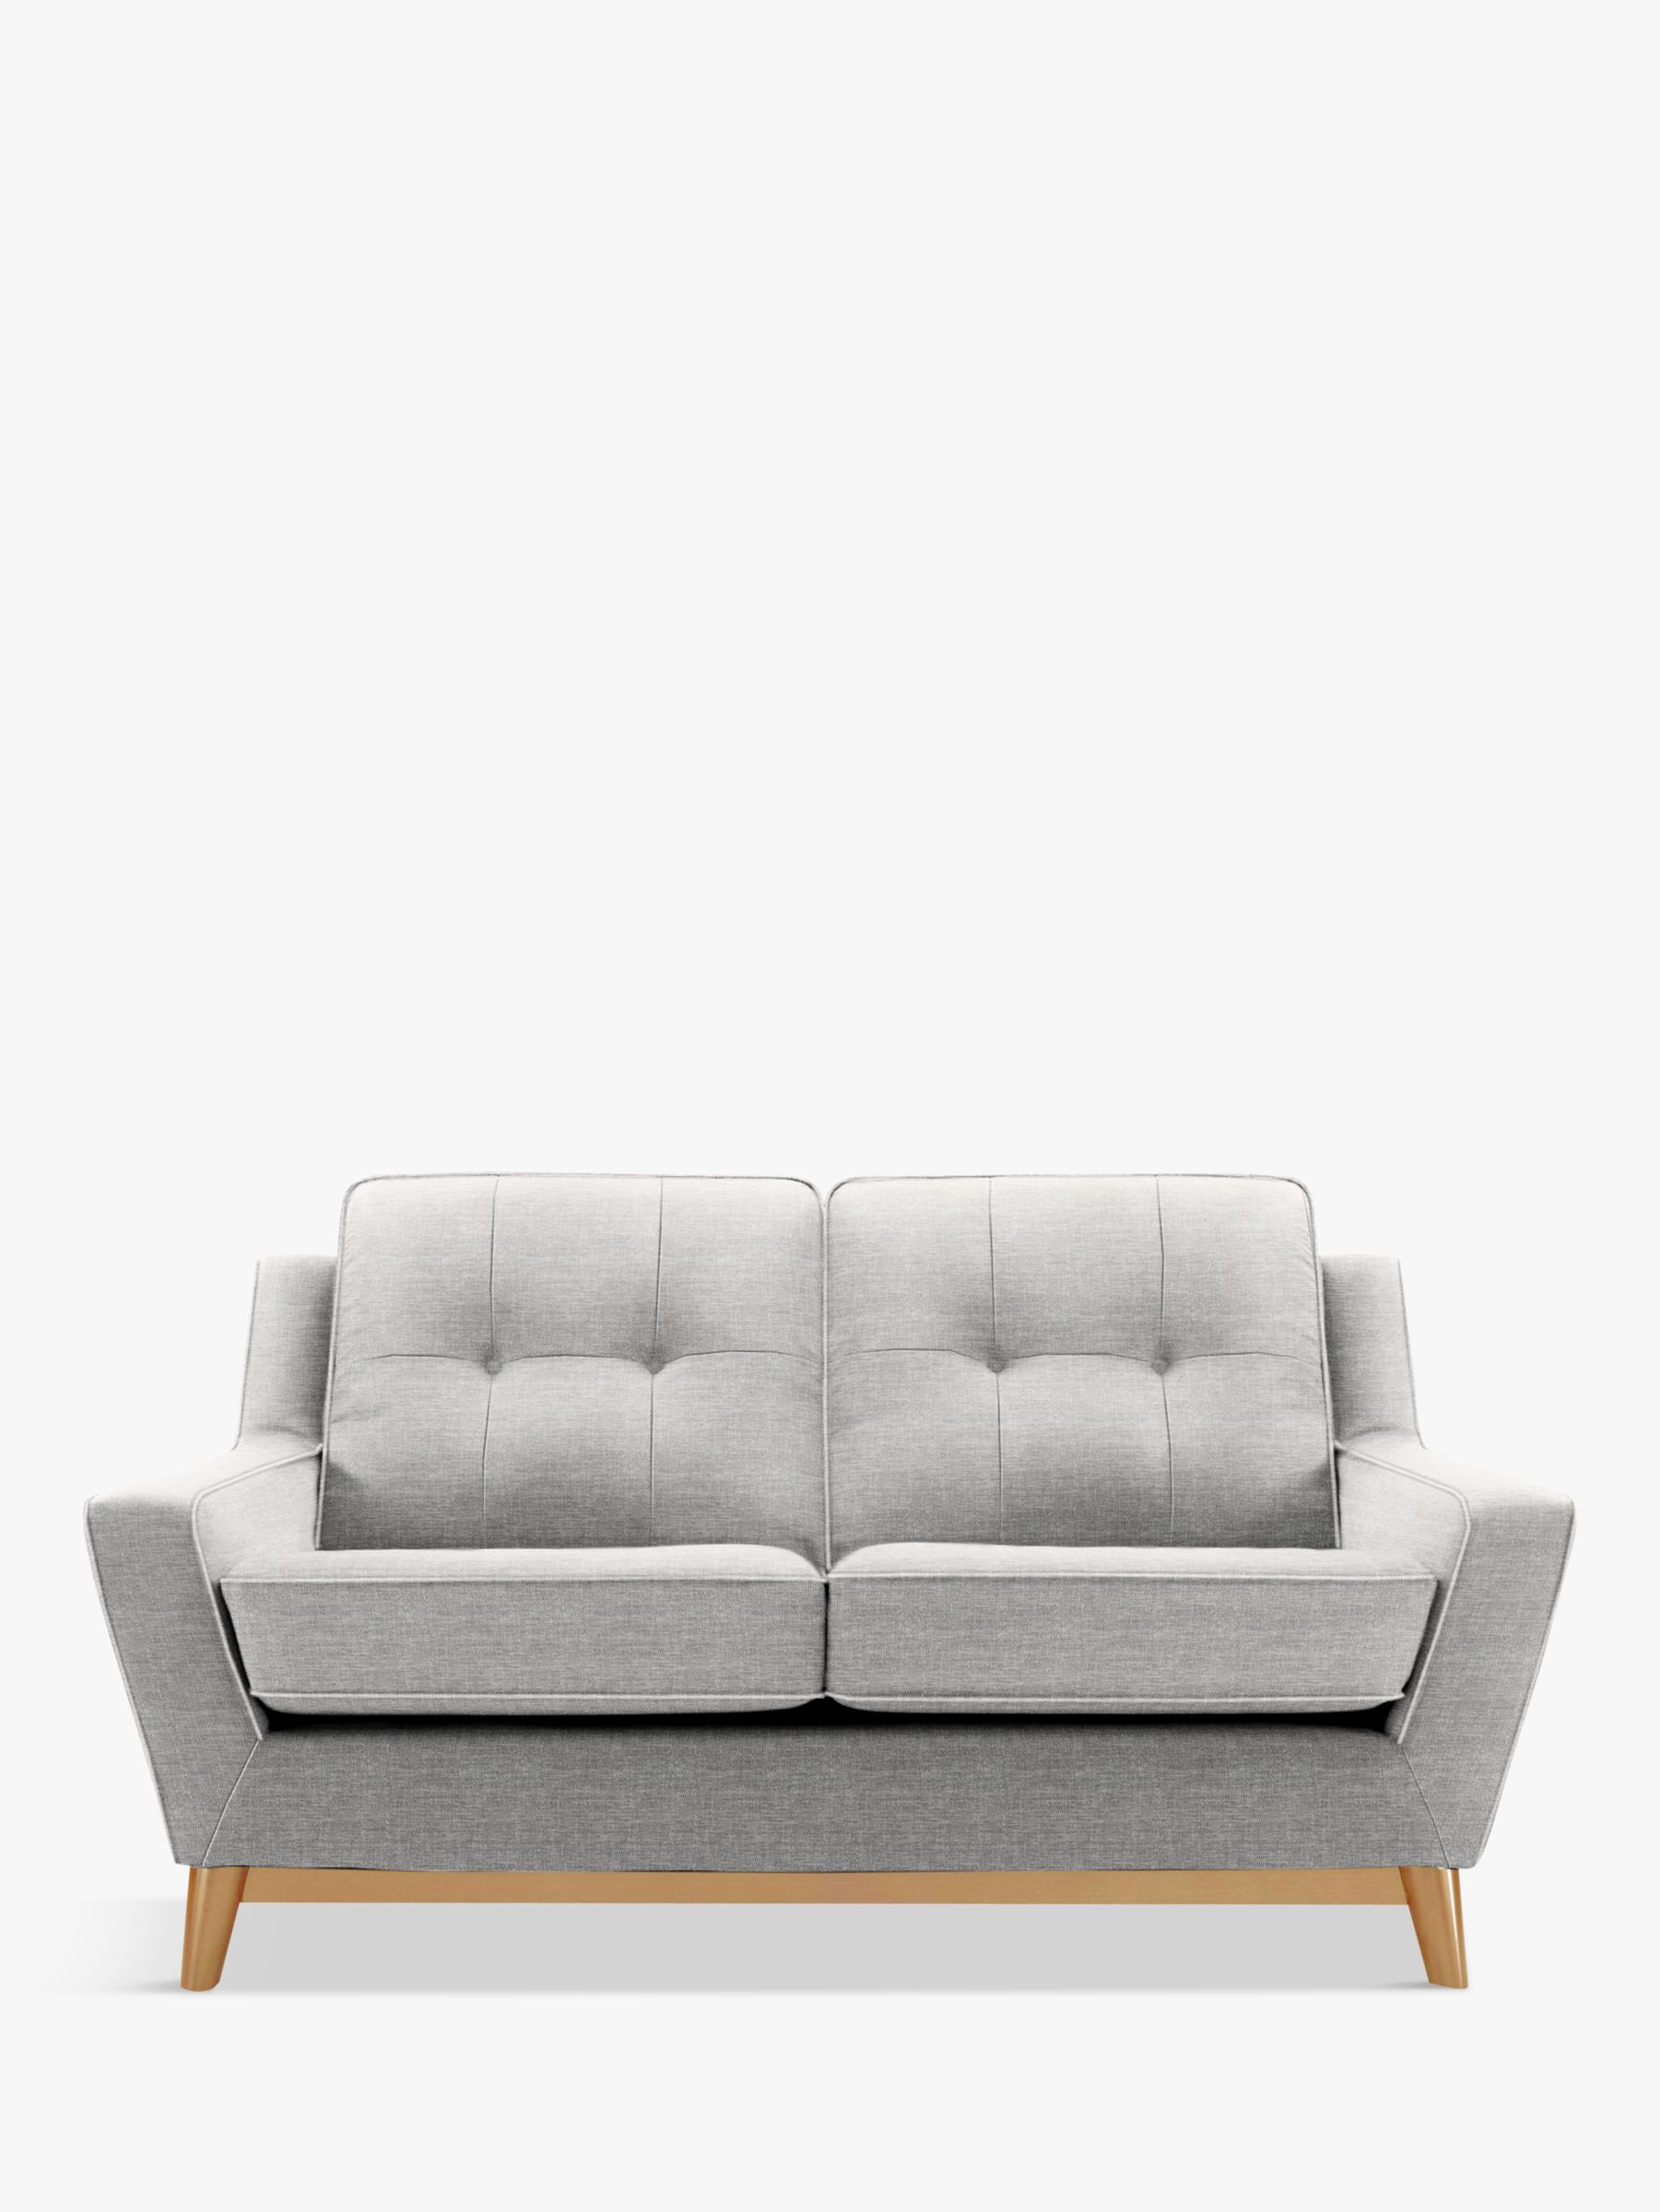 G Plan Vintage The Fifty Three Small Sofa, Marl Grey, width 159cm